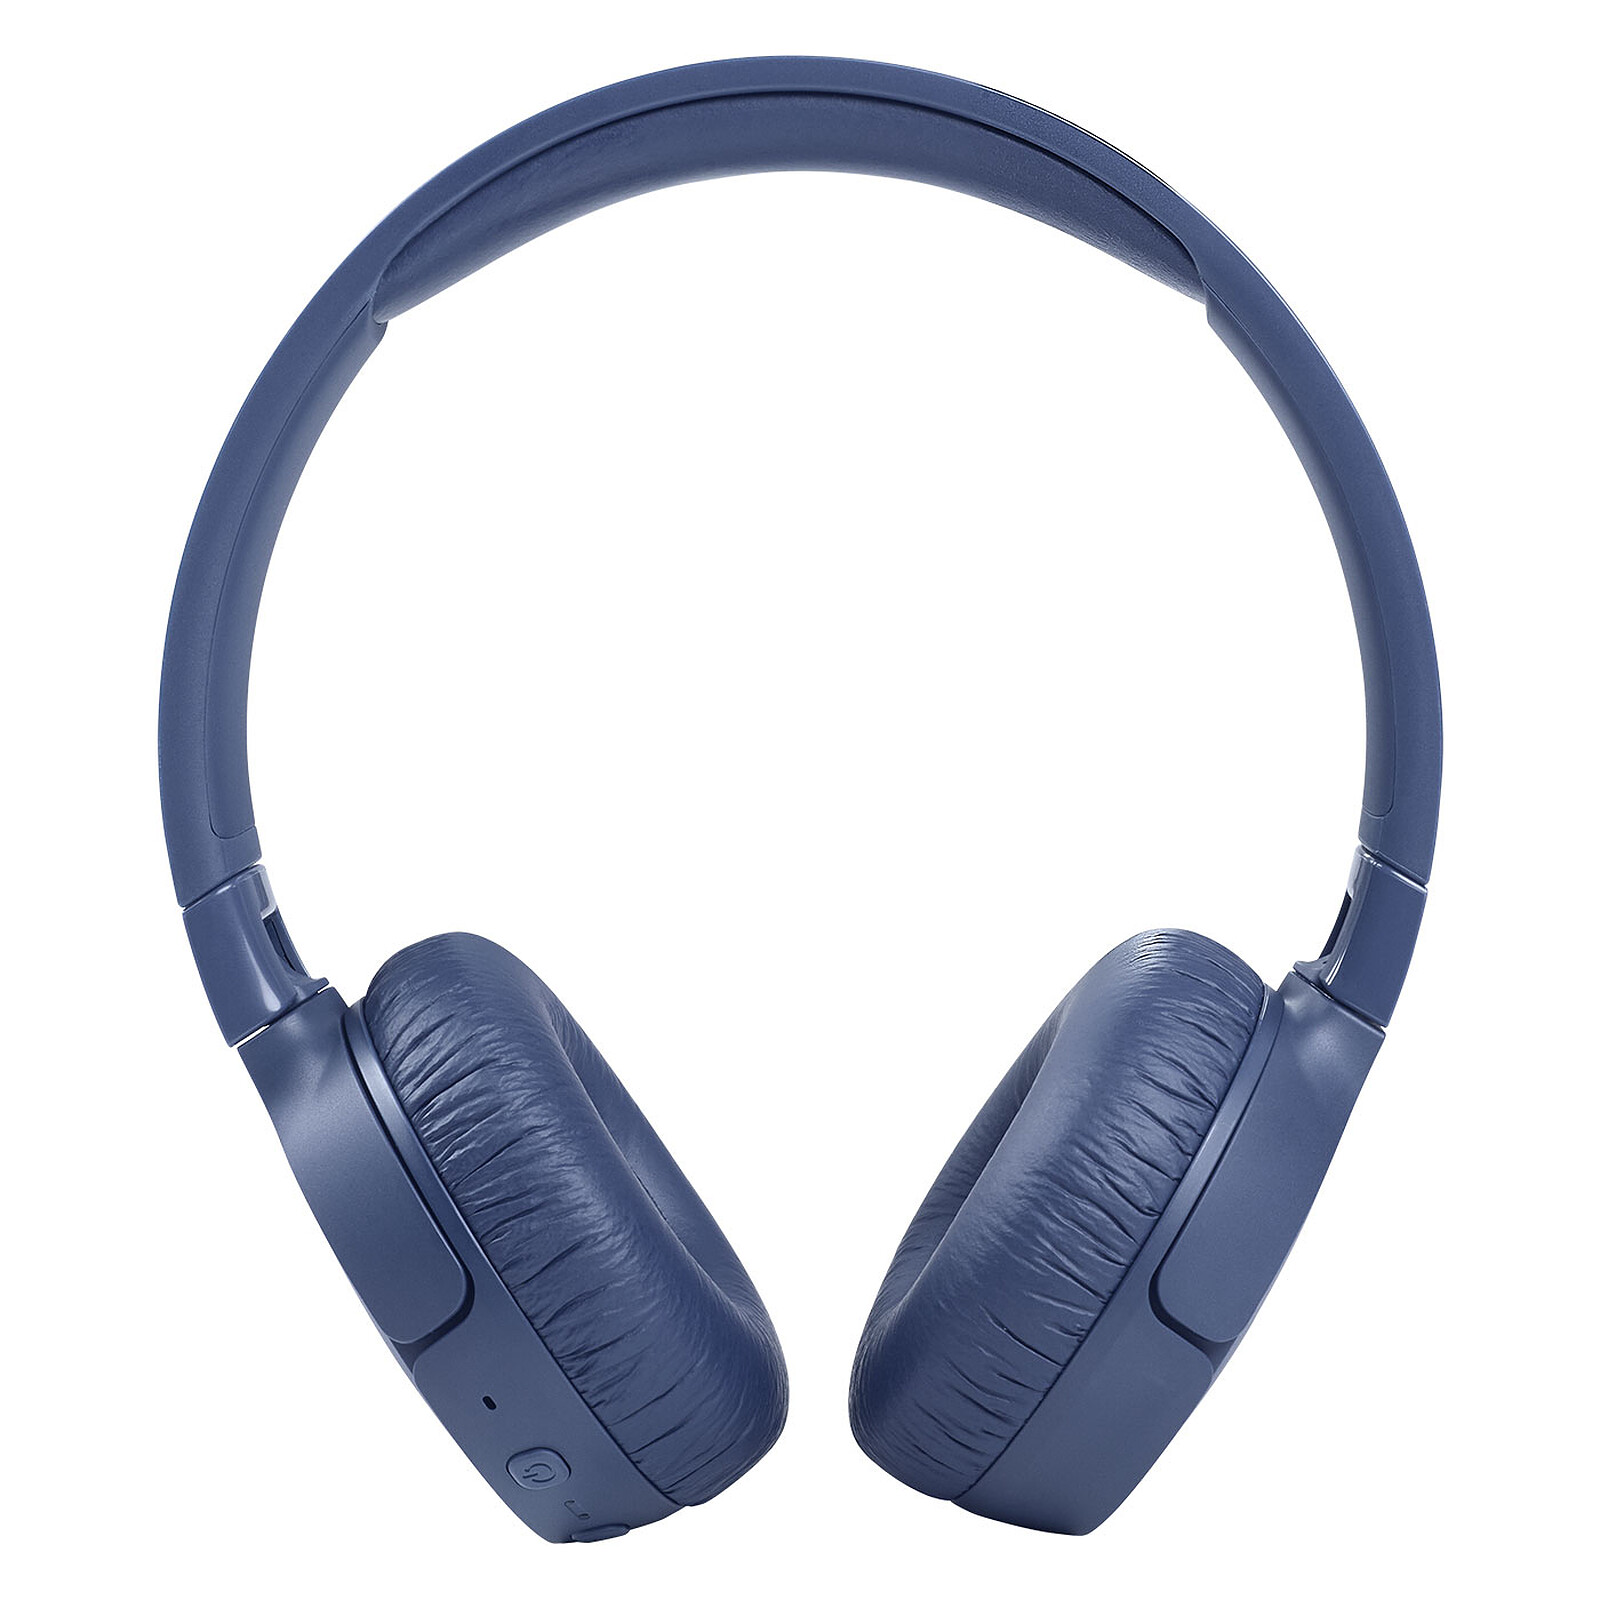 Sony WH-CH510 Black - Headphones - LDLC 3-year warranty